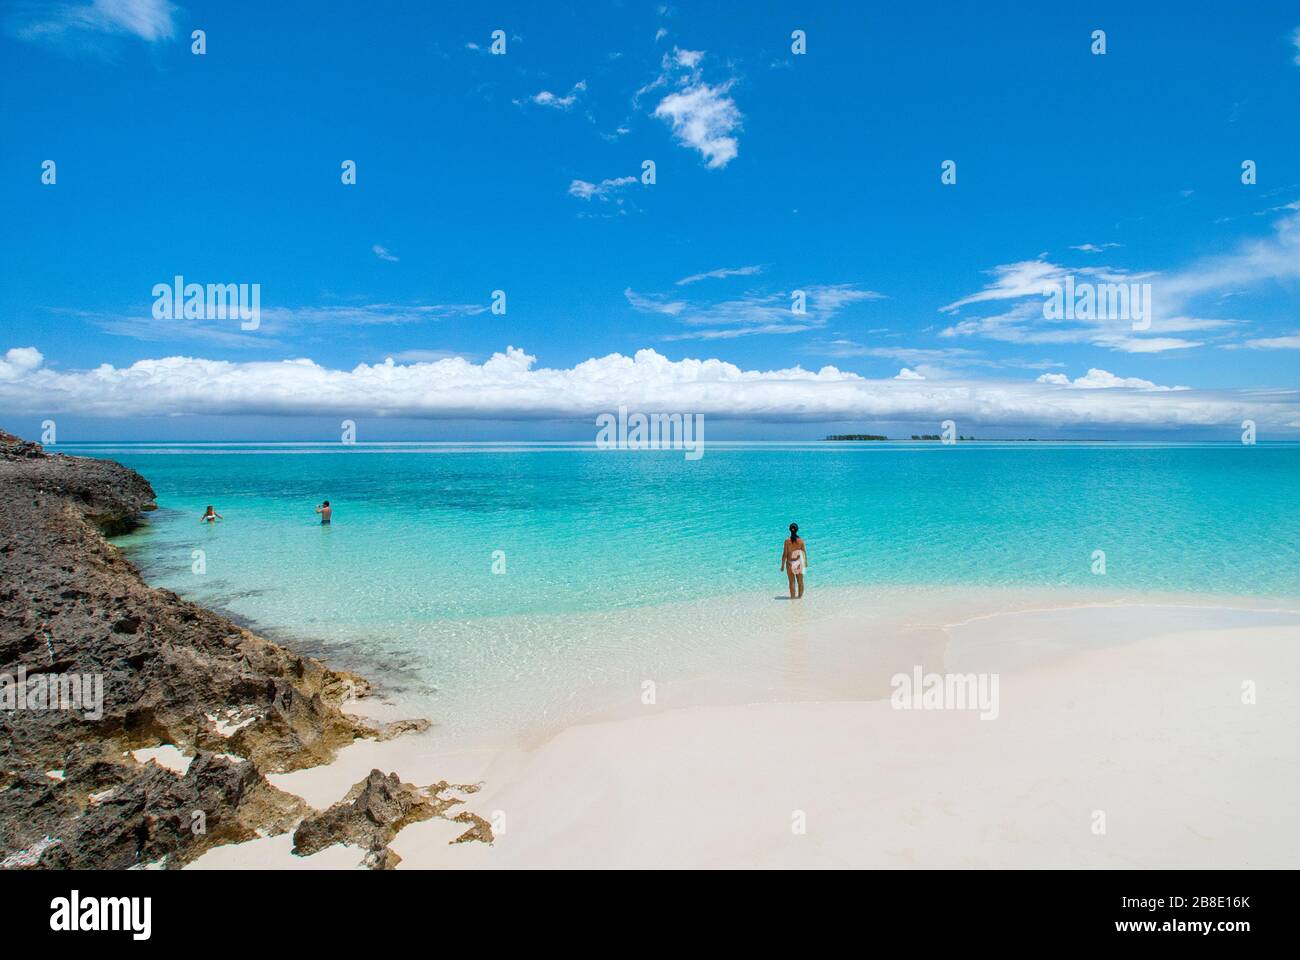 Playa pilar beach cuba immagini e fotografie stock ad alta risoluzione -  Alamy